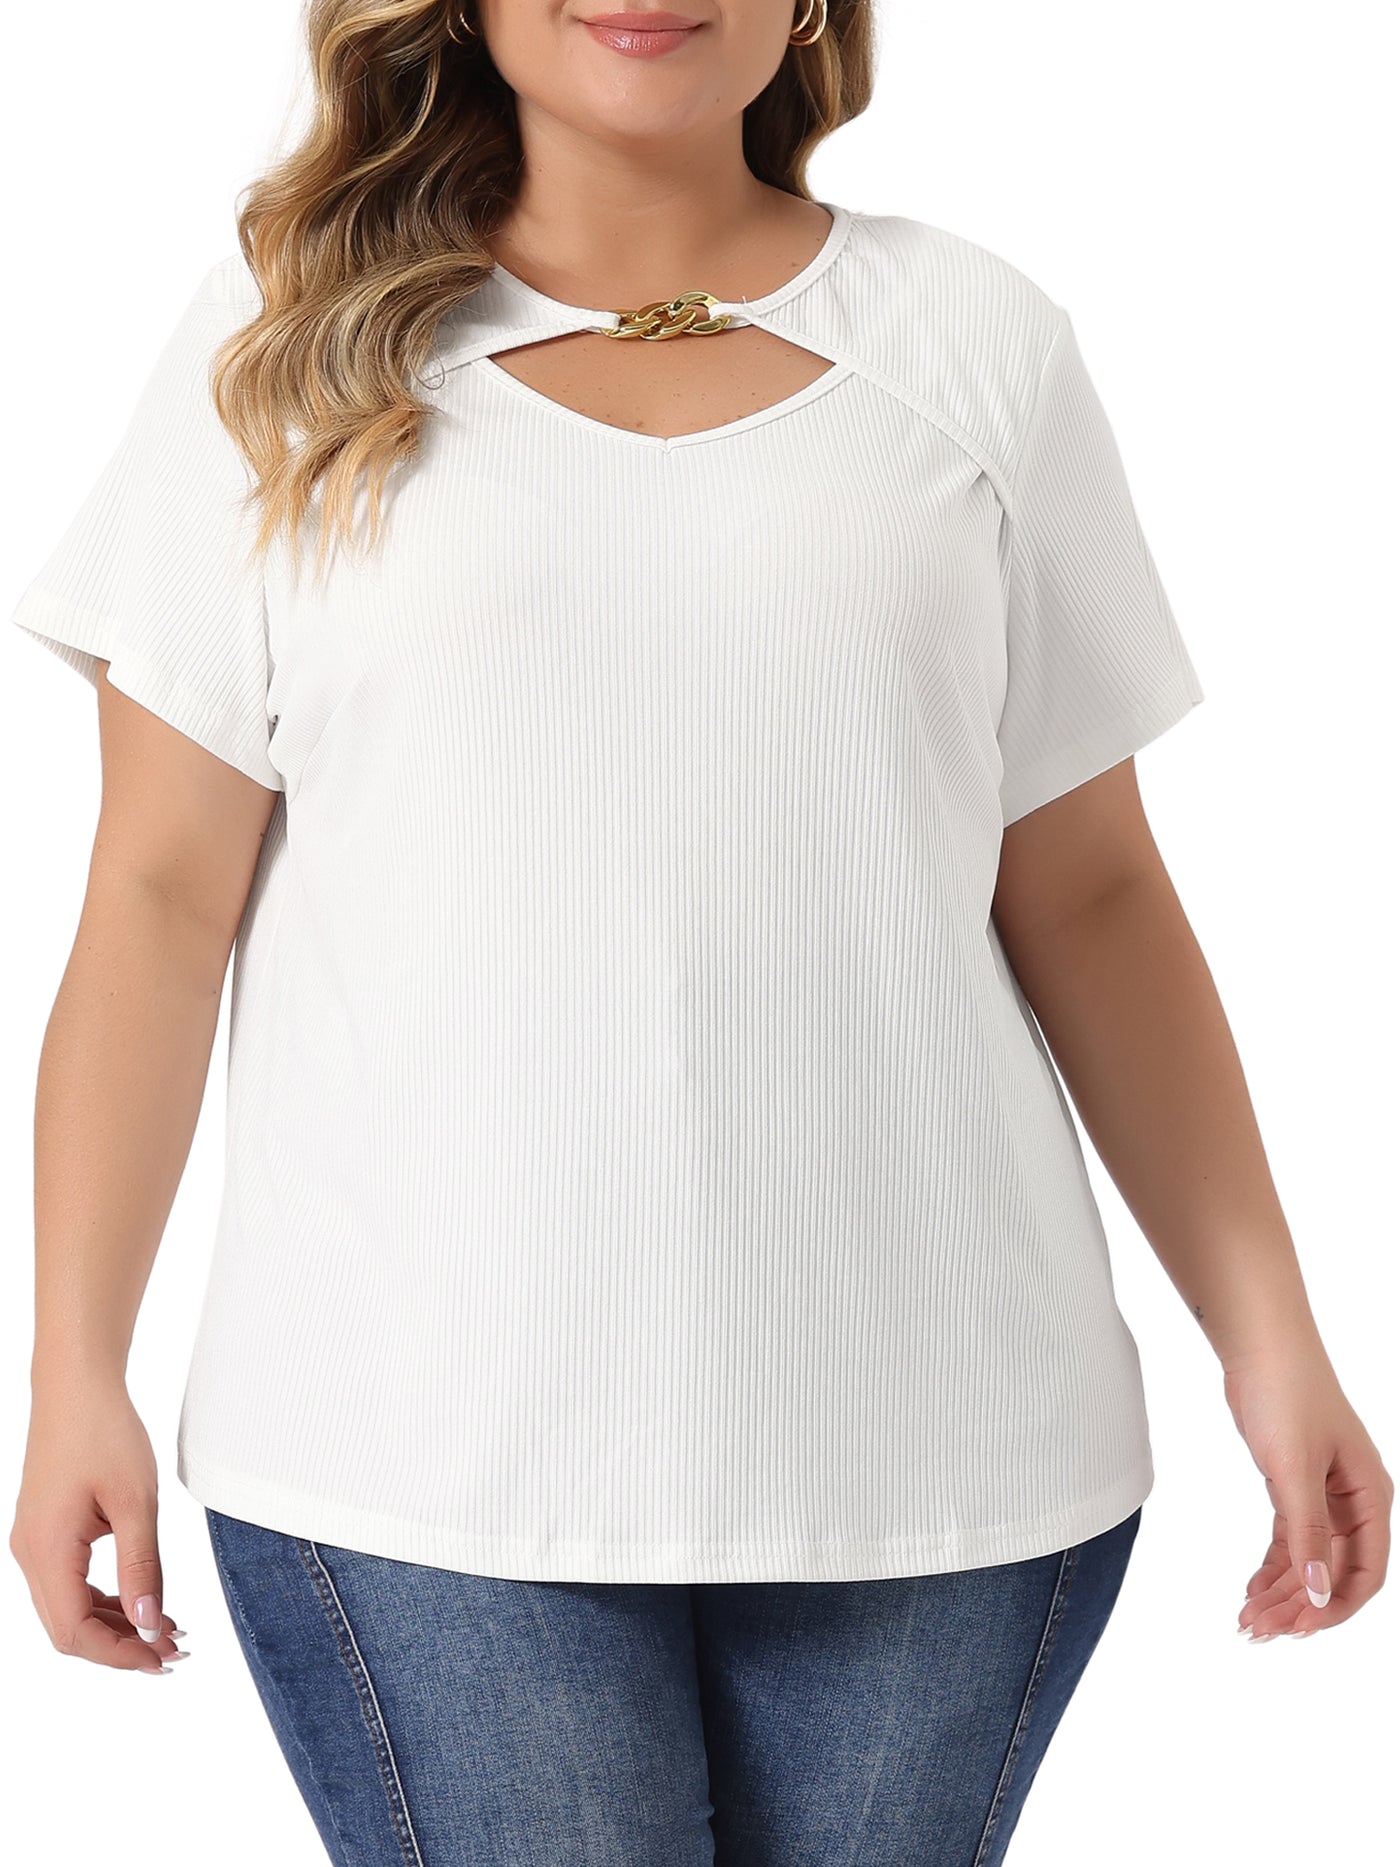 Bublédon Plus Size Top for Women Basic Short Sleeve Metal Chain Crop Tops Cutout Front Bodycon T-Shirts